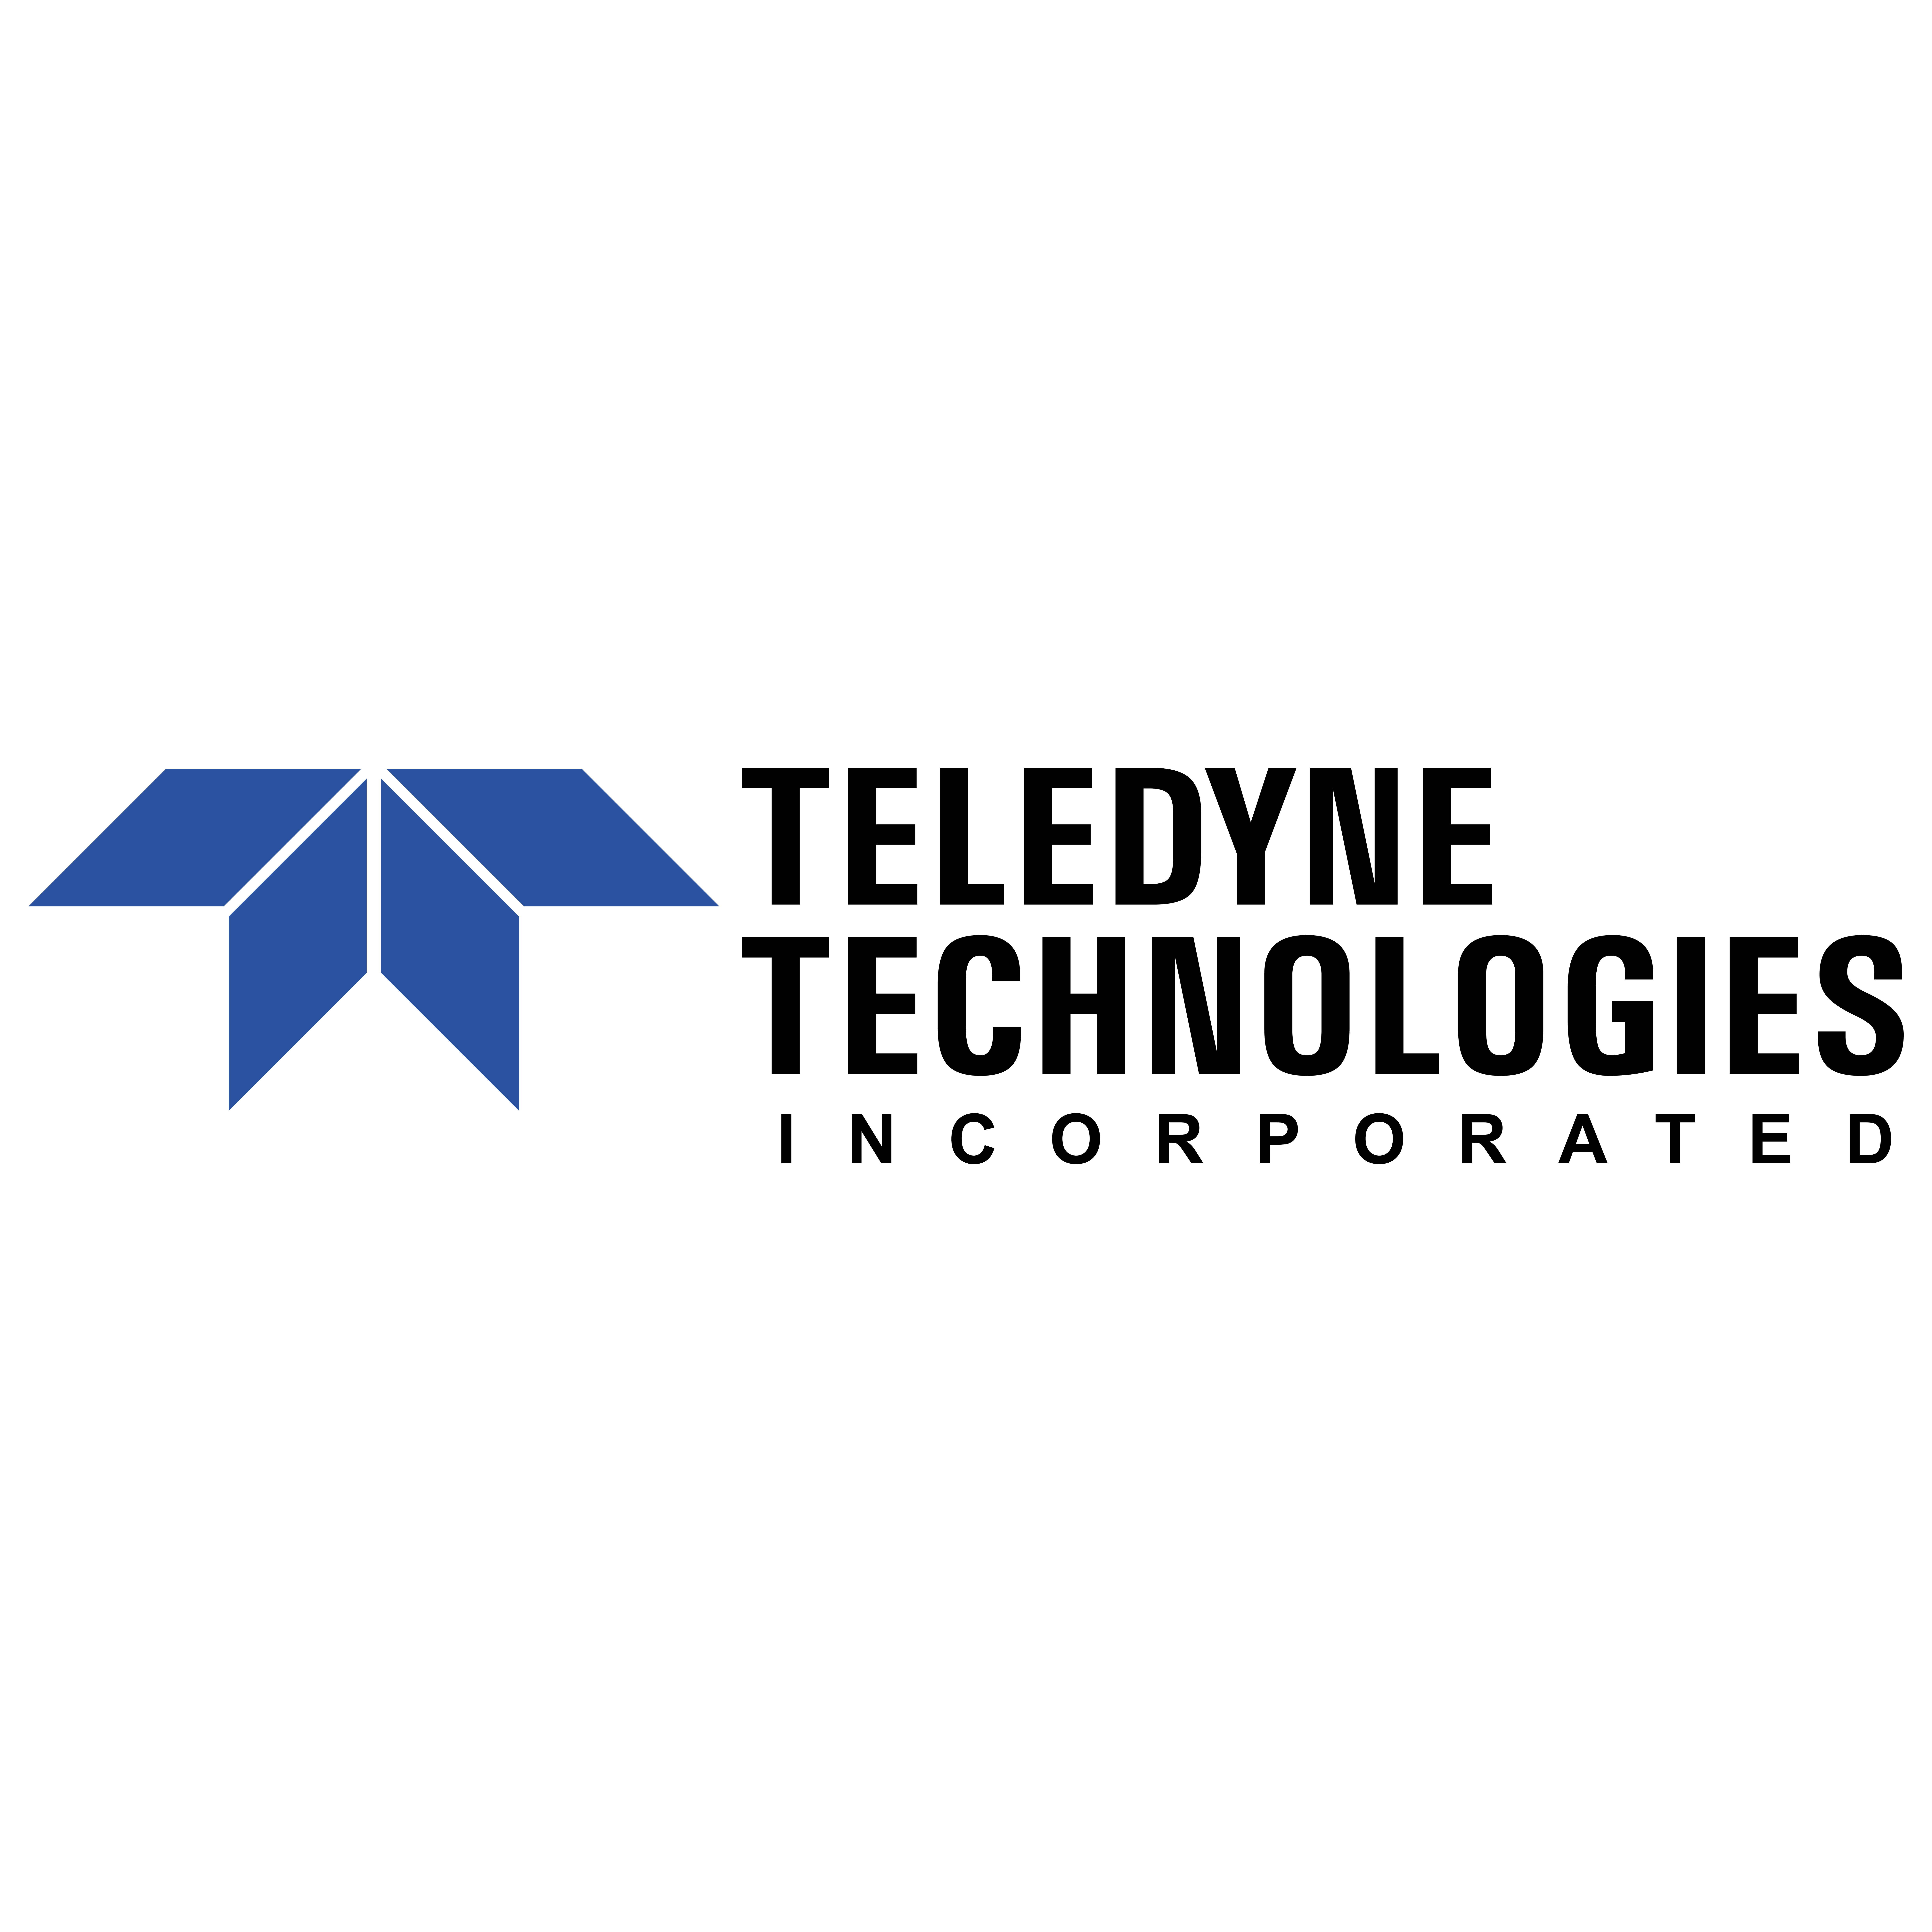 Teledyne_logo